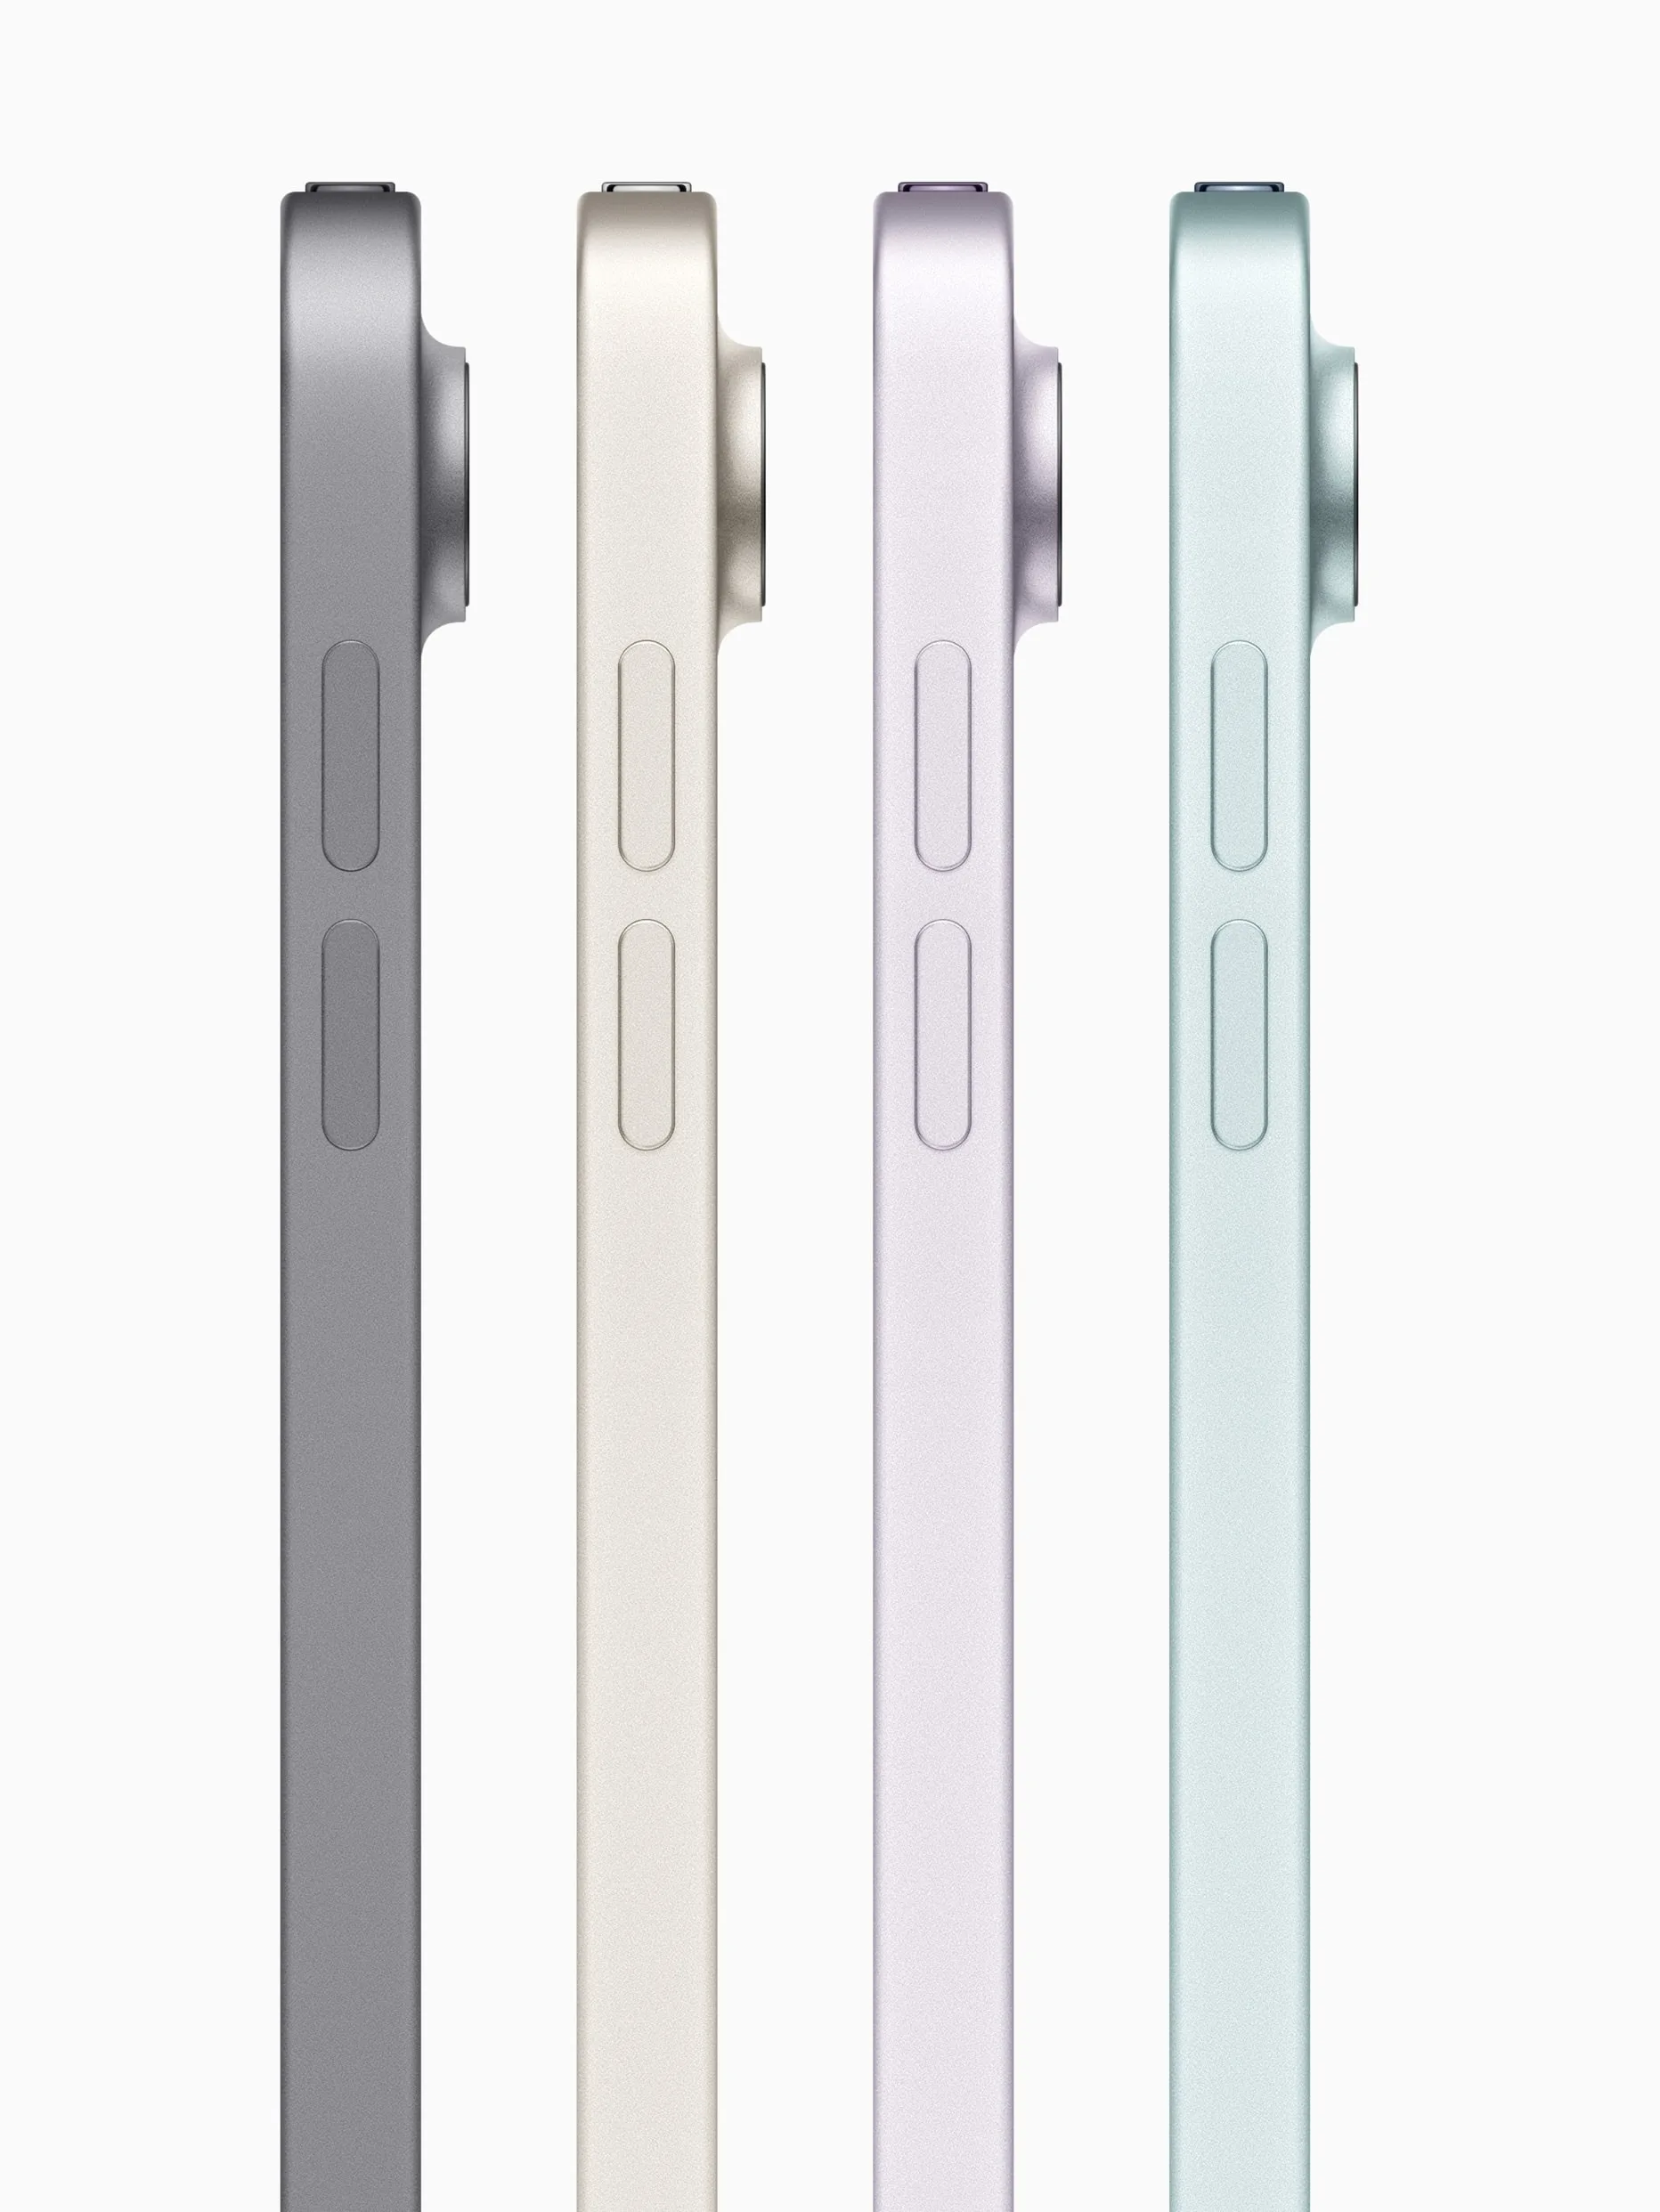 Apple iPad Air color lineup 2405 jpg